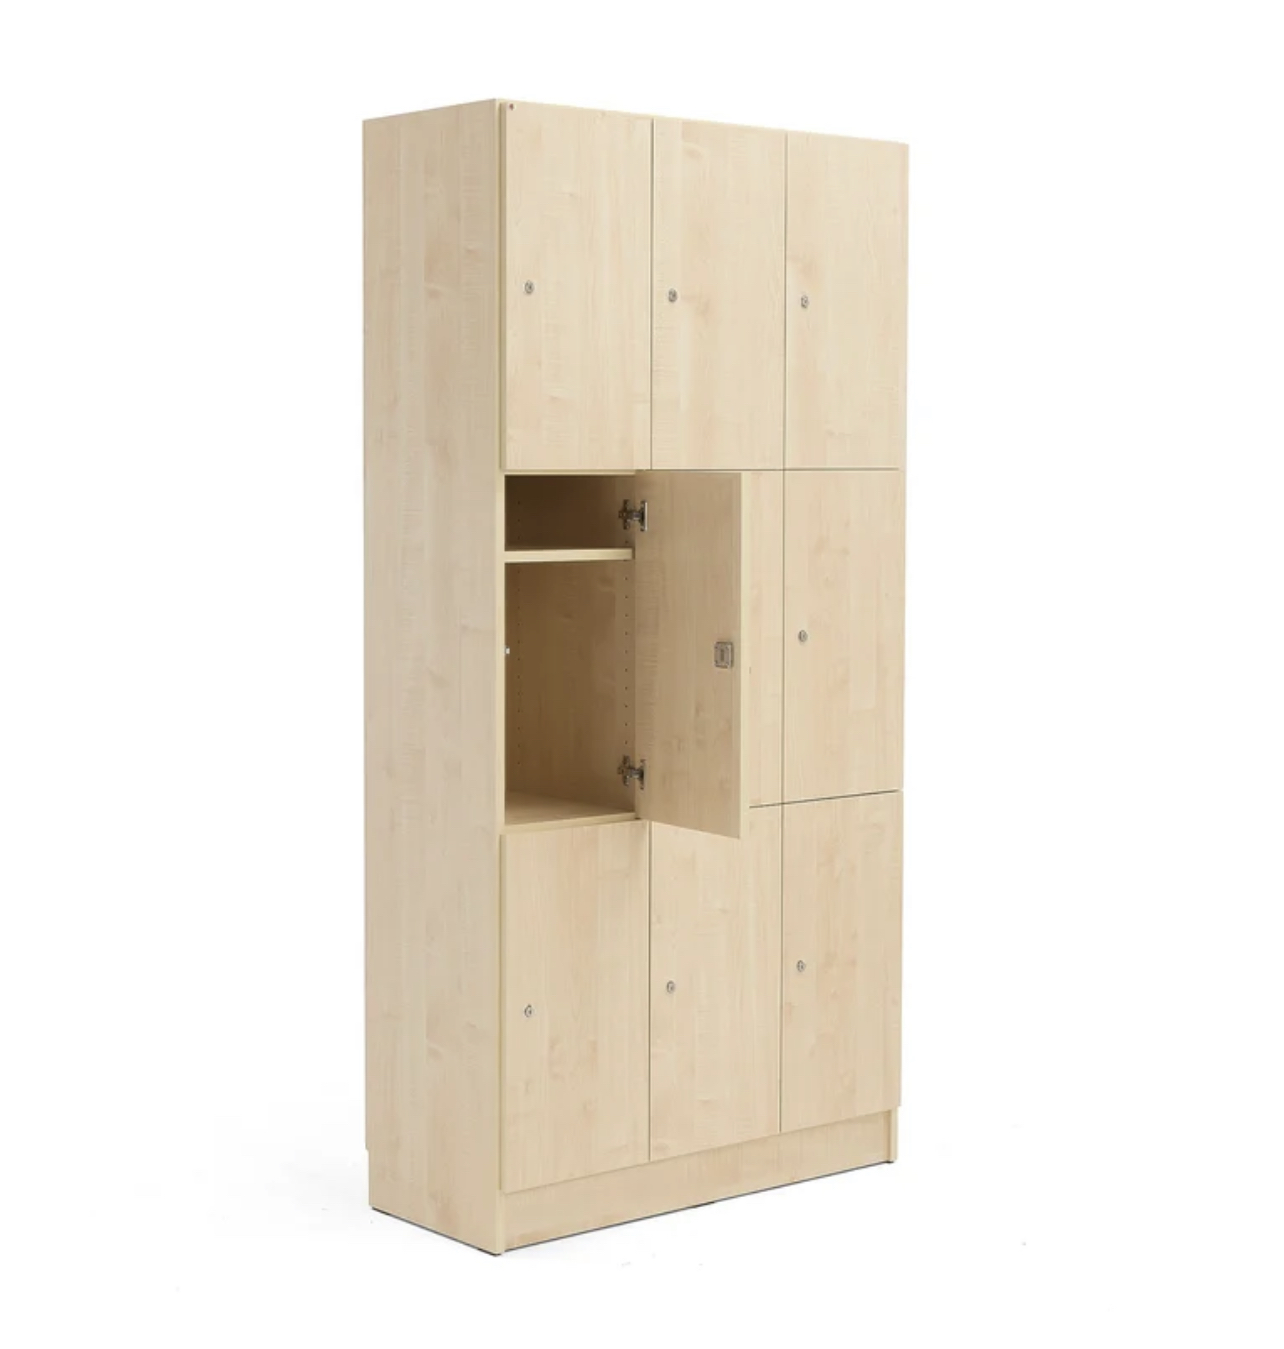 Wooden Locker 15 door compartments white or birch  finish 